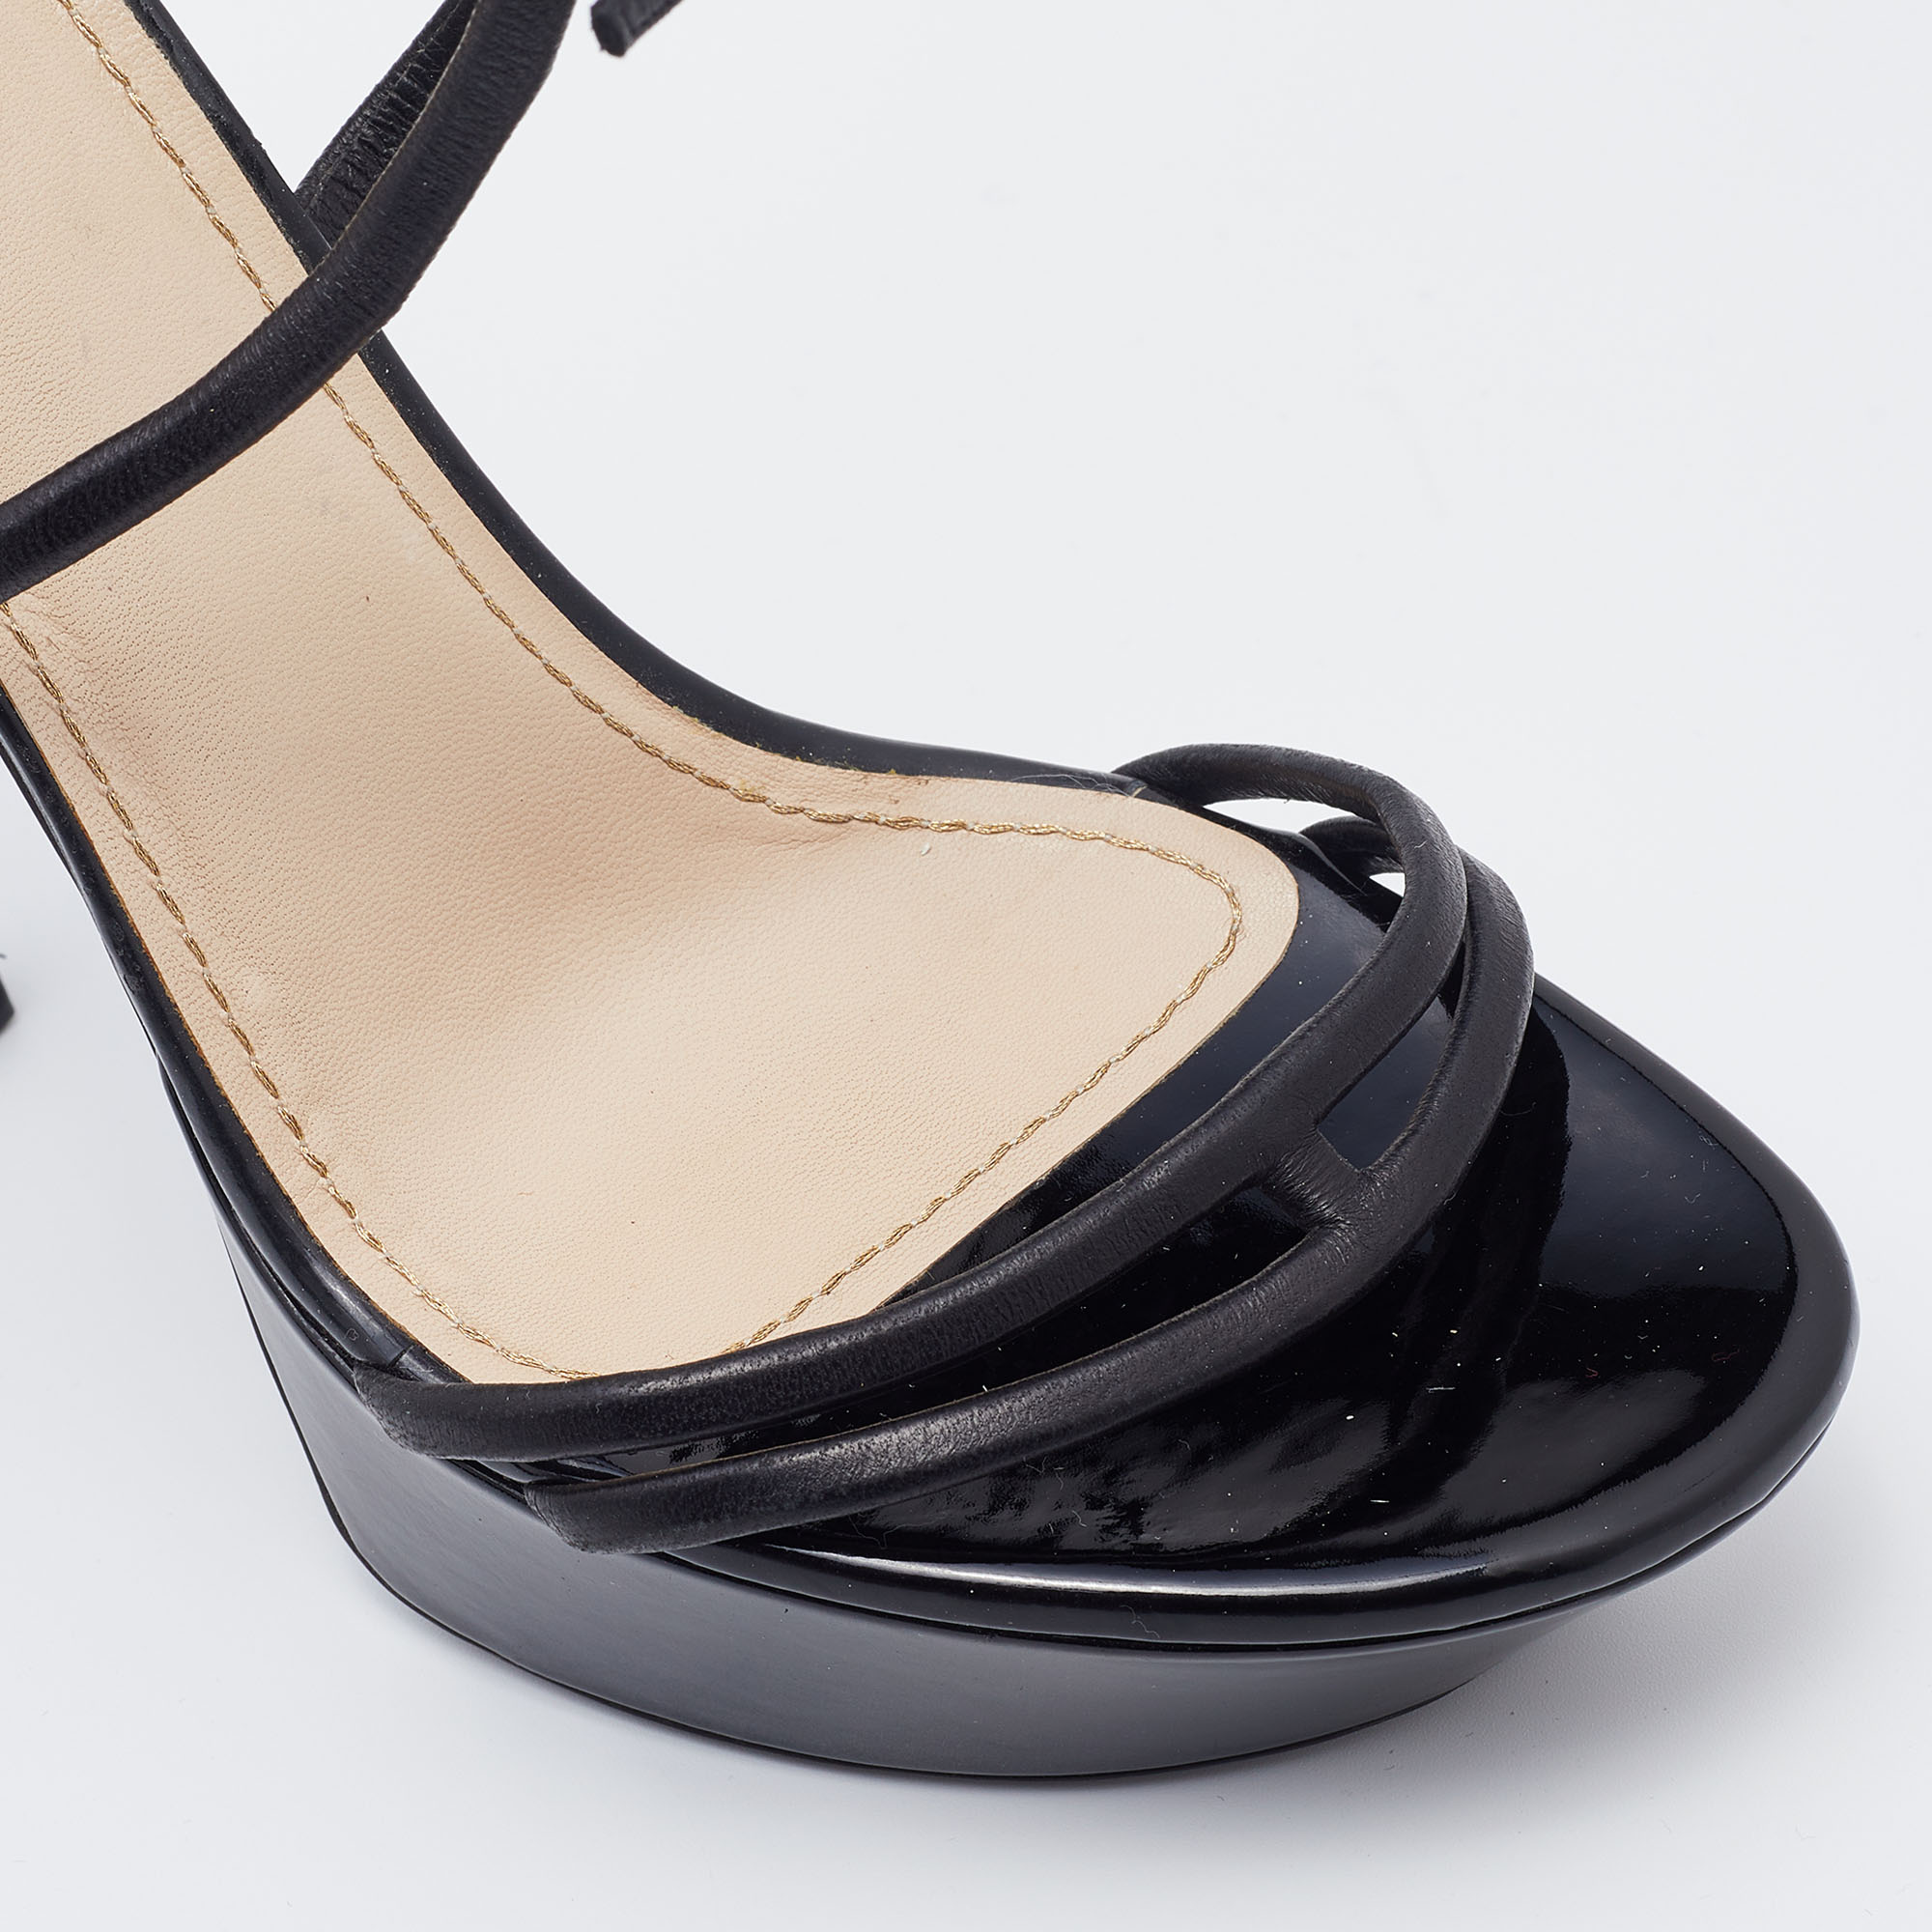 Yves Saint Laurent Black/Olive Green Patent And Leather Platform Ankle Strap Sandals Size 39